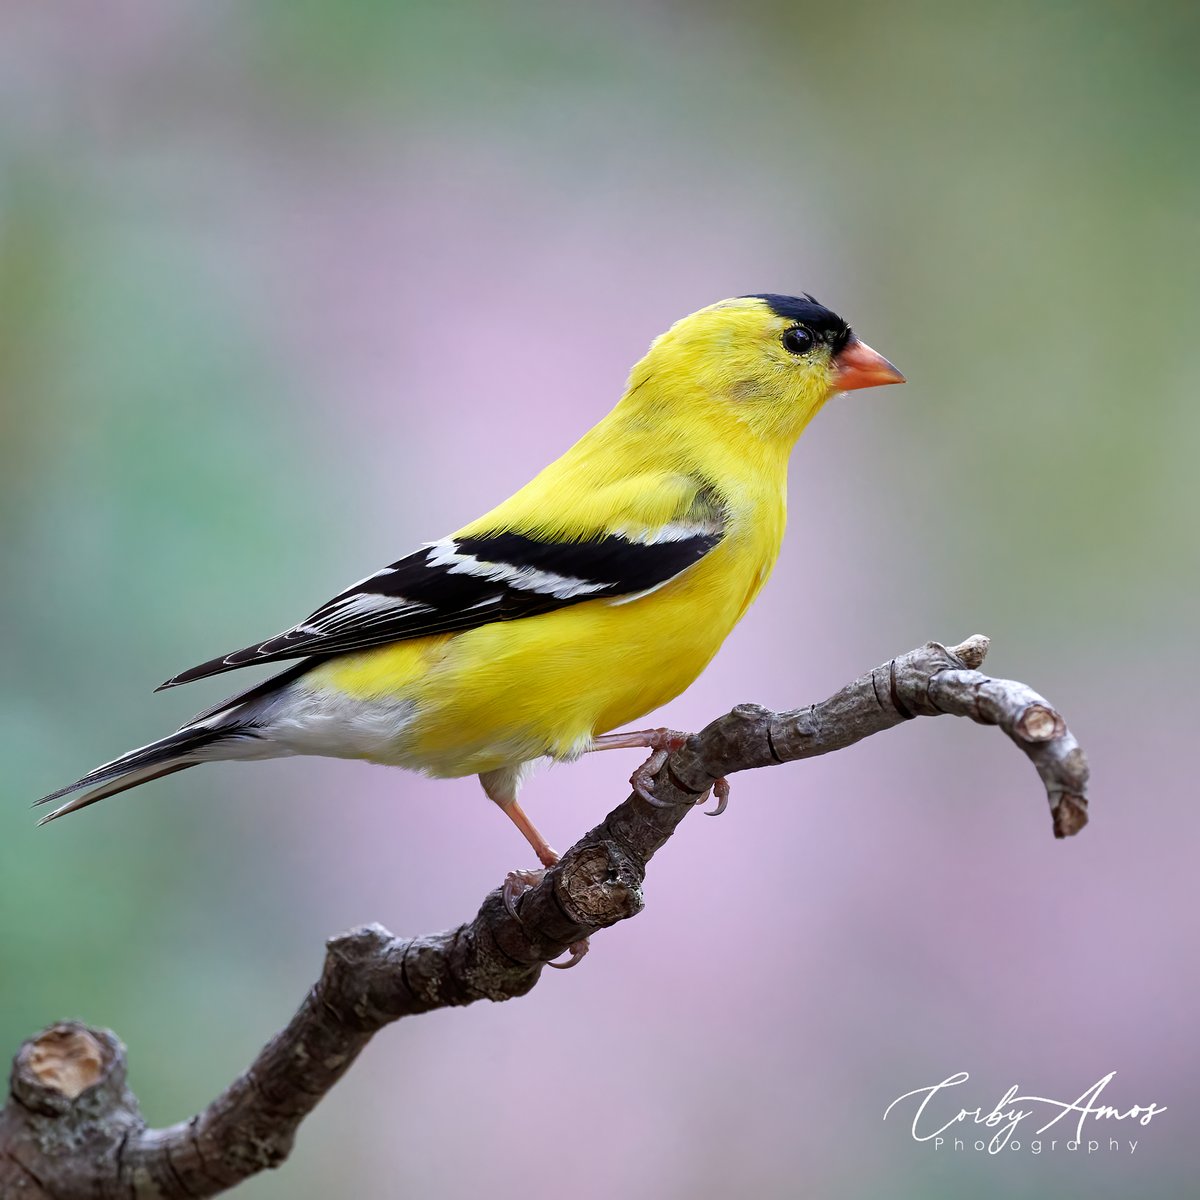 American Goldfinch
.
linktr.ee/corbyamos
.
#birdphotography #birdwatching #birding #BirdTwitter #twitterbirds #birdpics